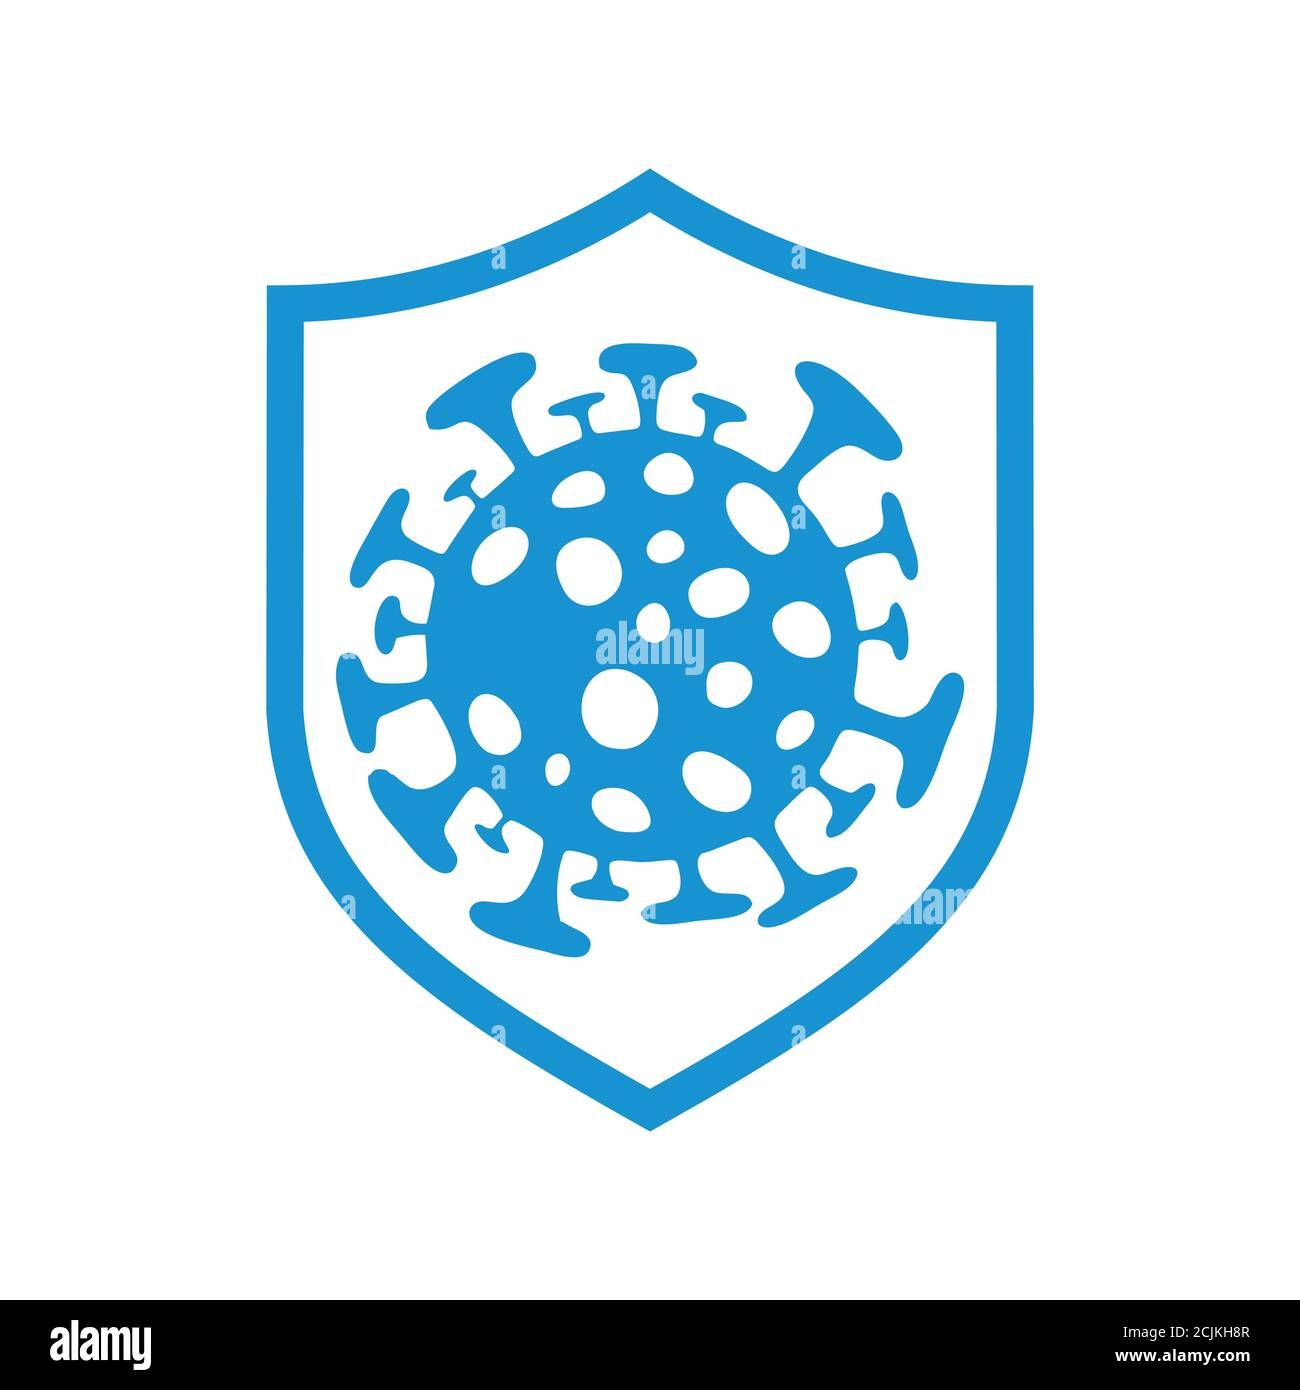 A shield of quarantine symbol for virus spread in vector format Stock Vector